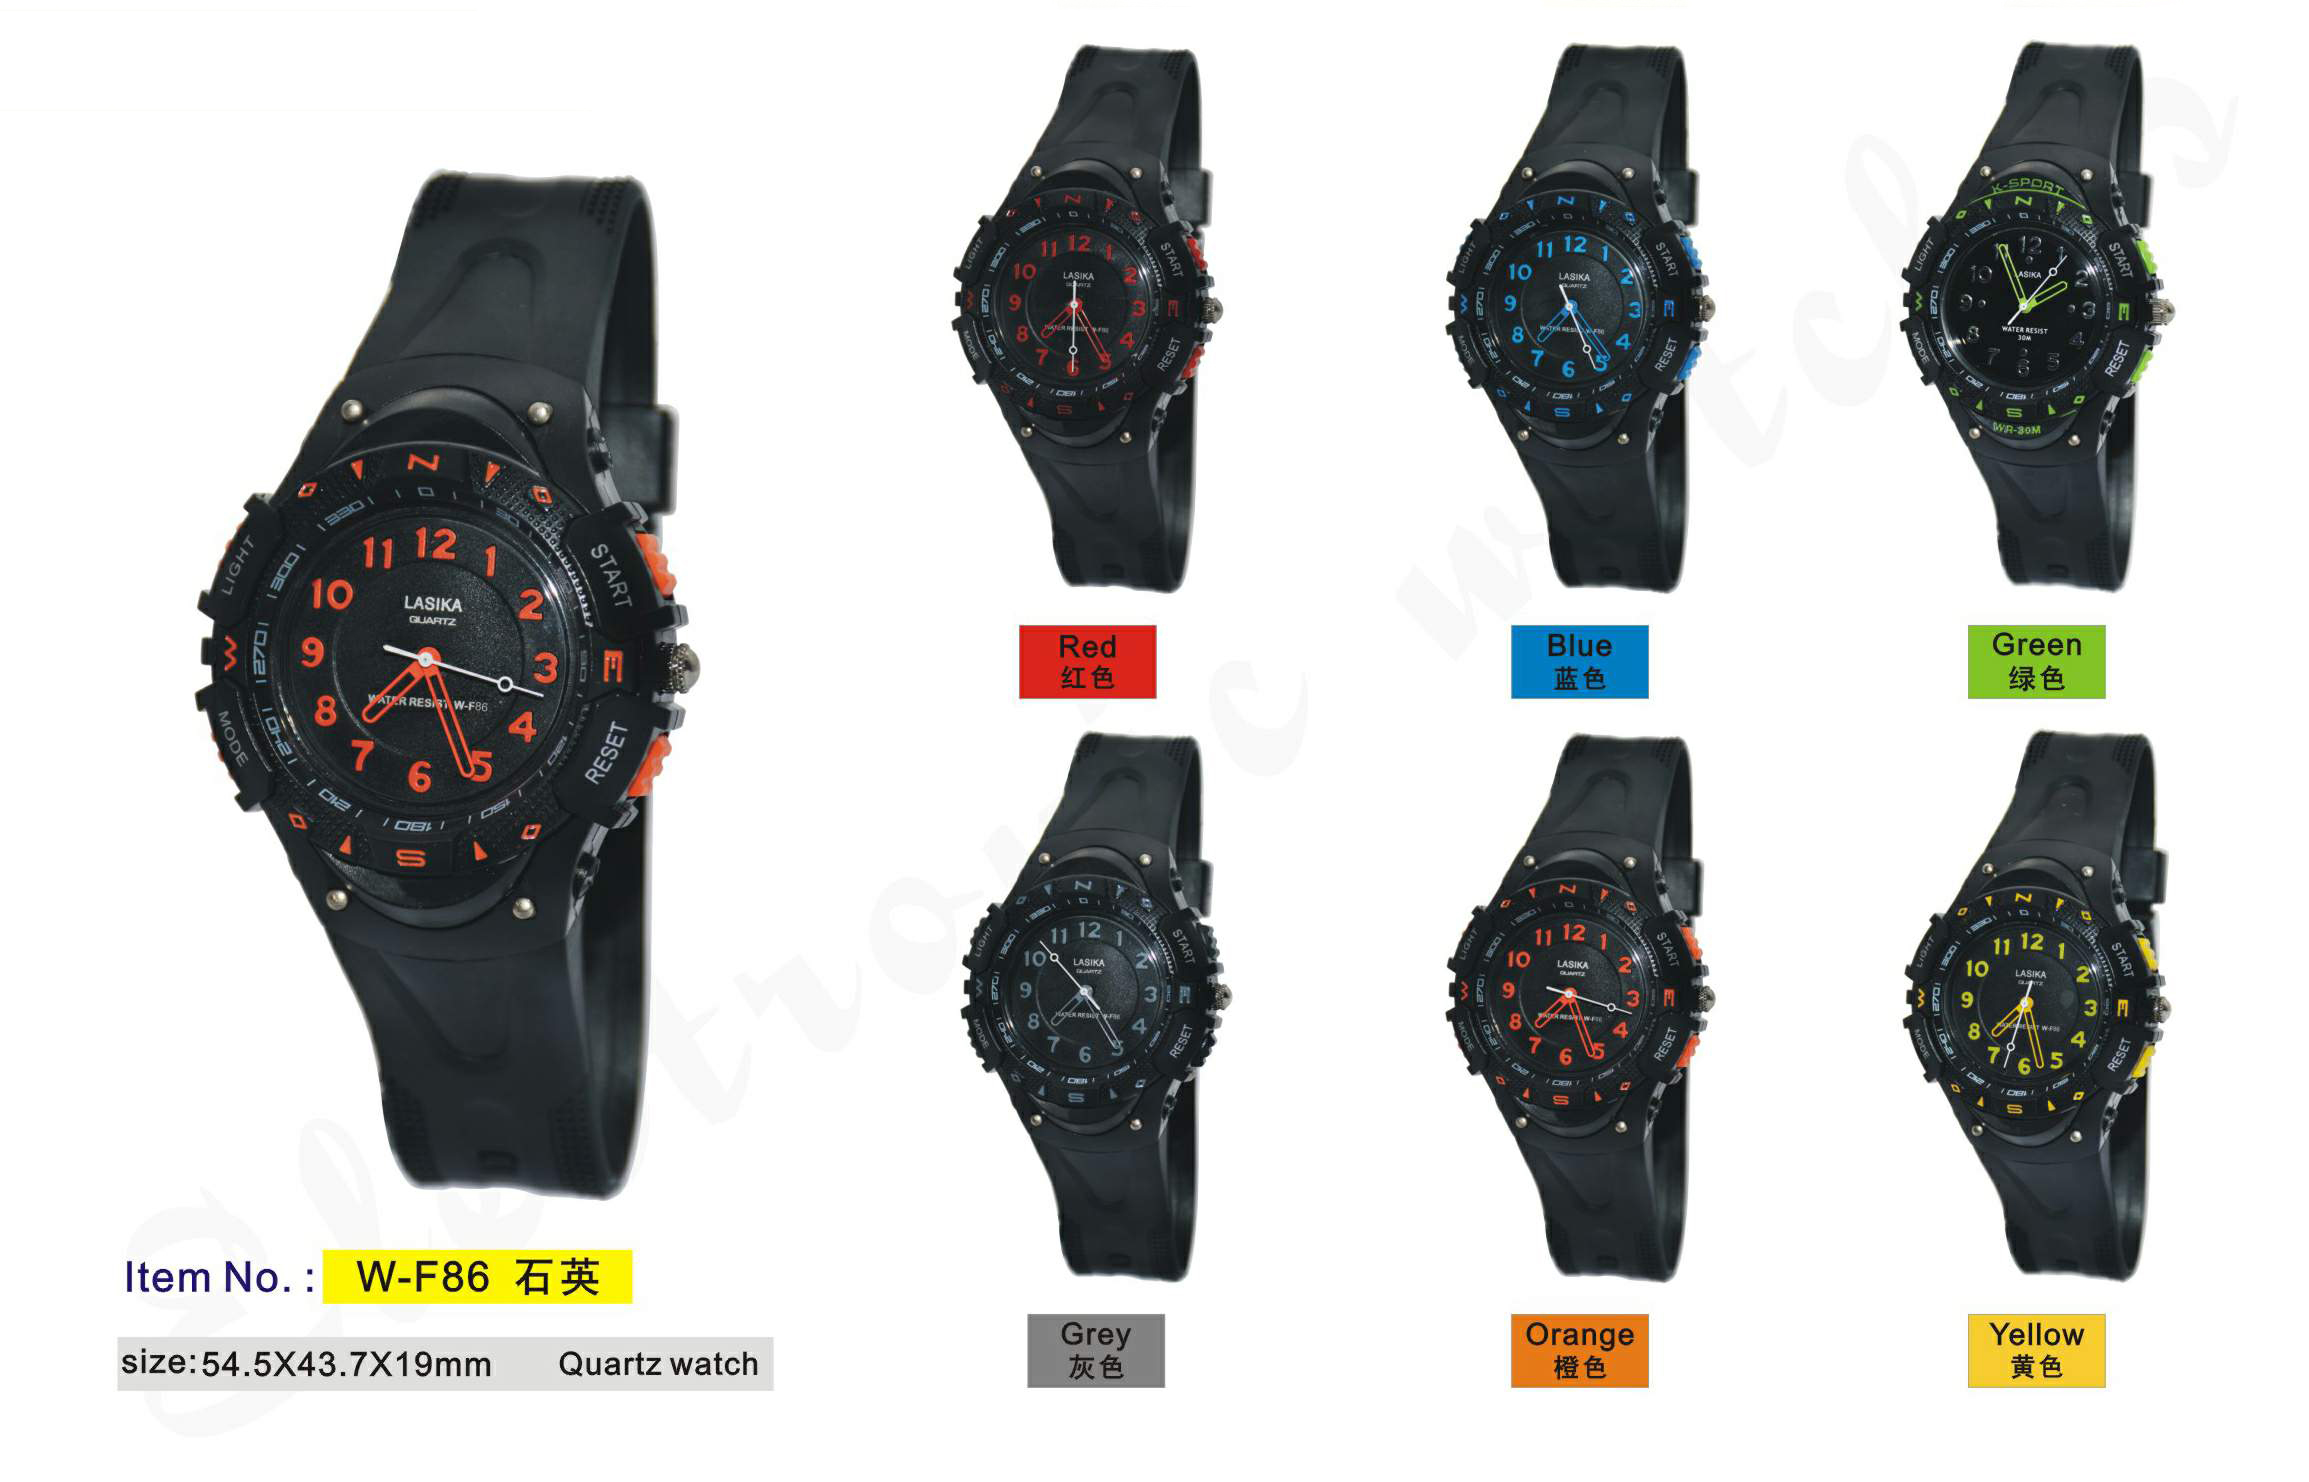 Black colour wrist watch #86